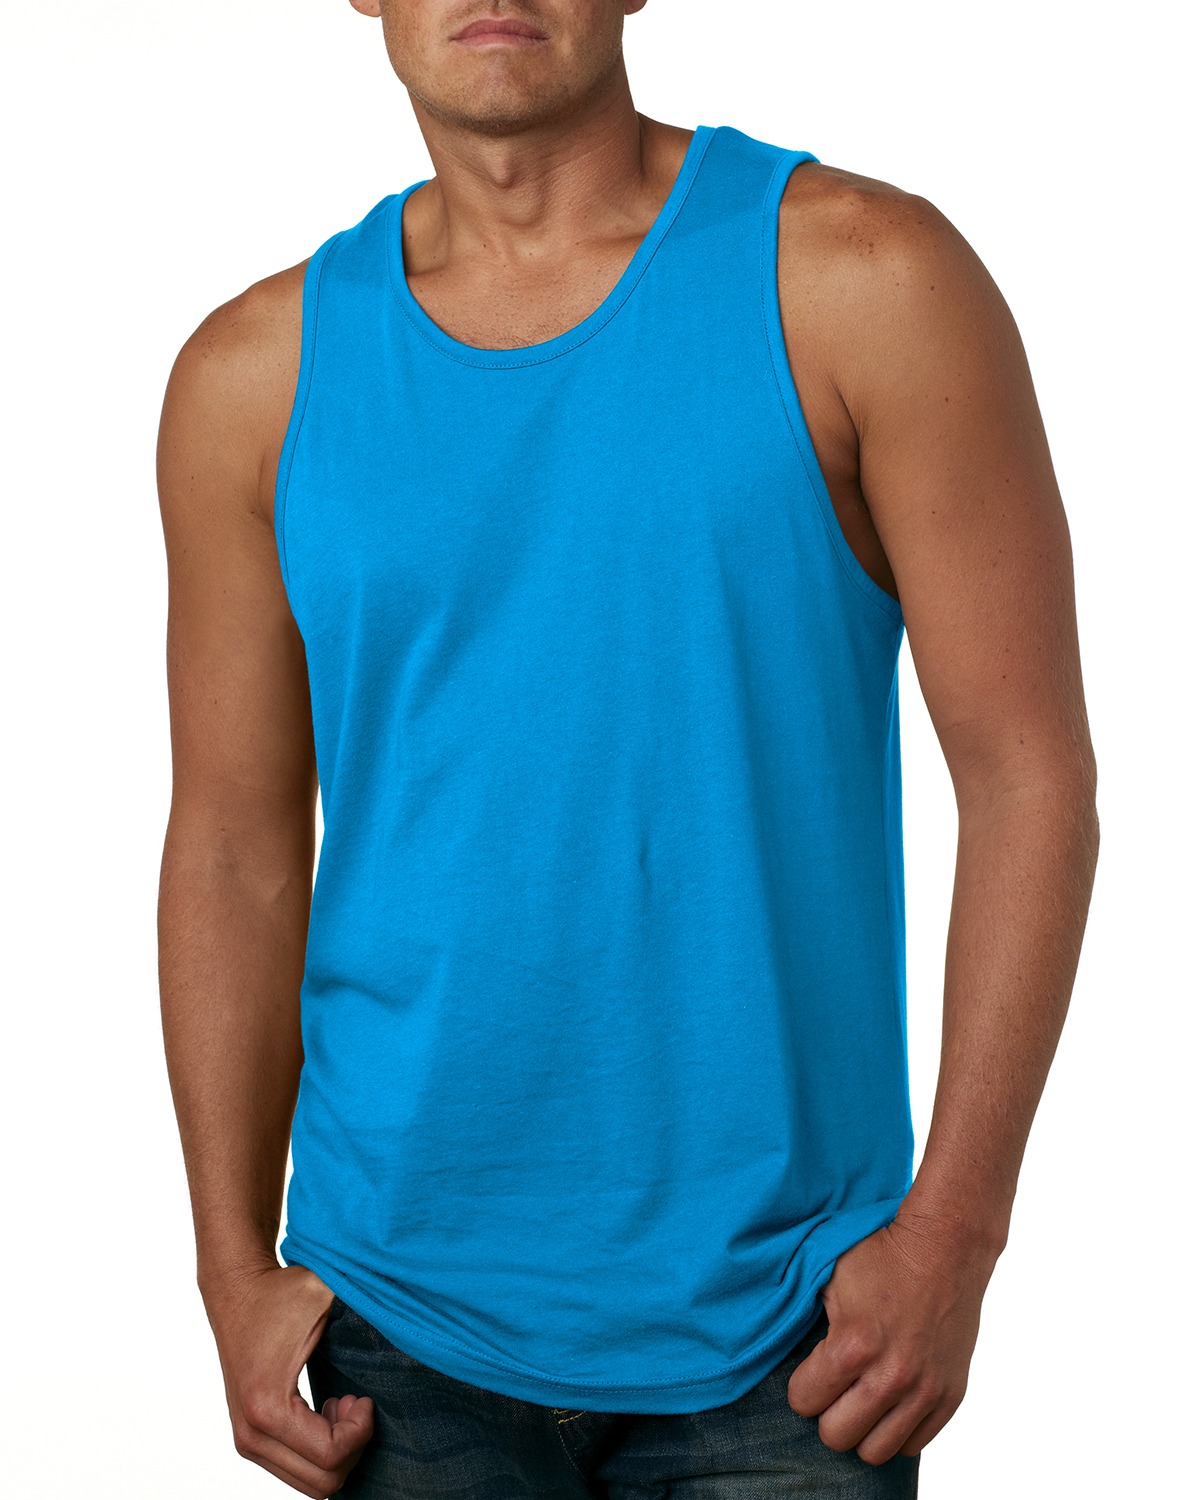 https://images.shirtspace.com/fullsize/eKy0BuF72QmJ3RaBU%2BU%2BsQ%3D%3D/109440/5043-next-level-3633-men-s-cotton-tank-front-turquoise.jpg